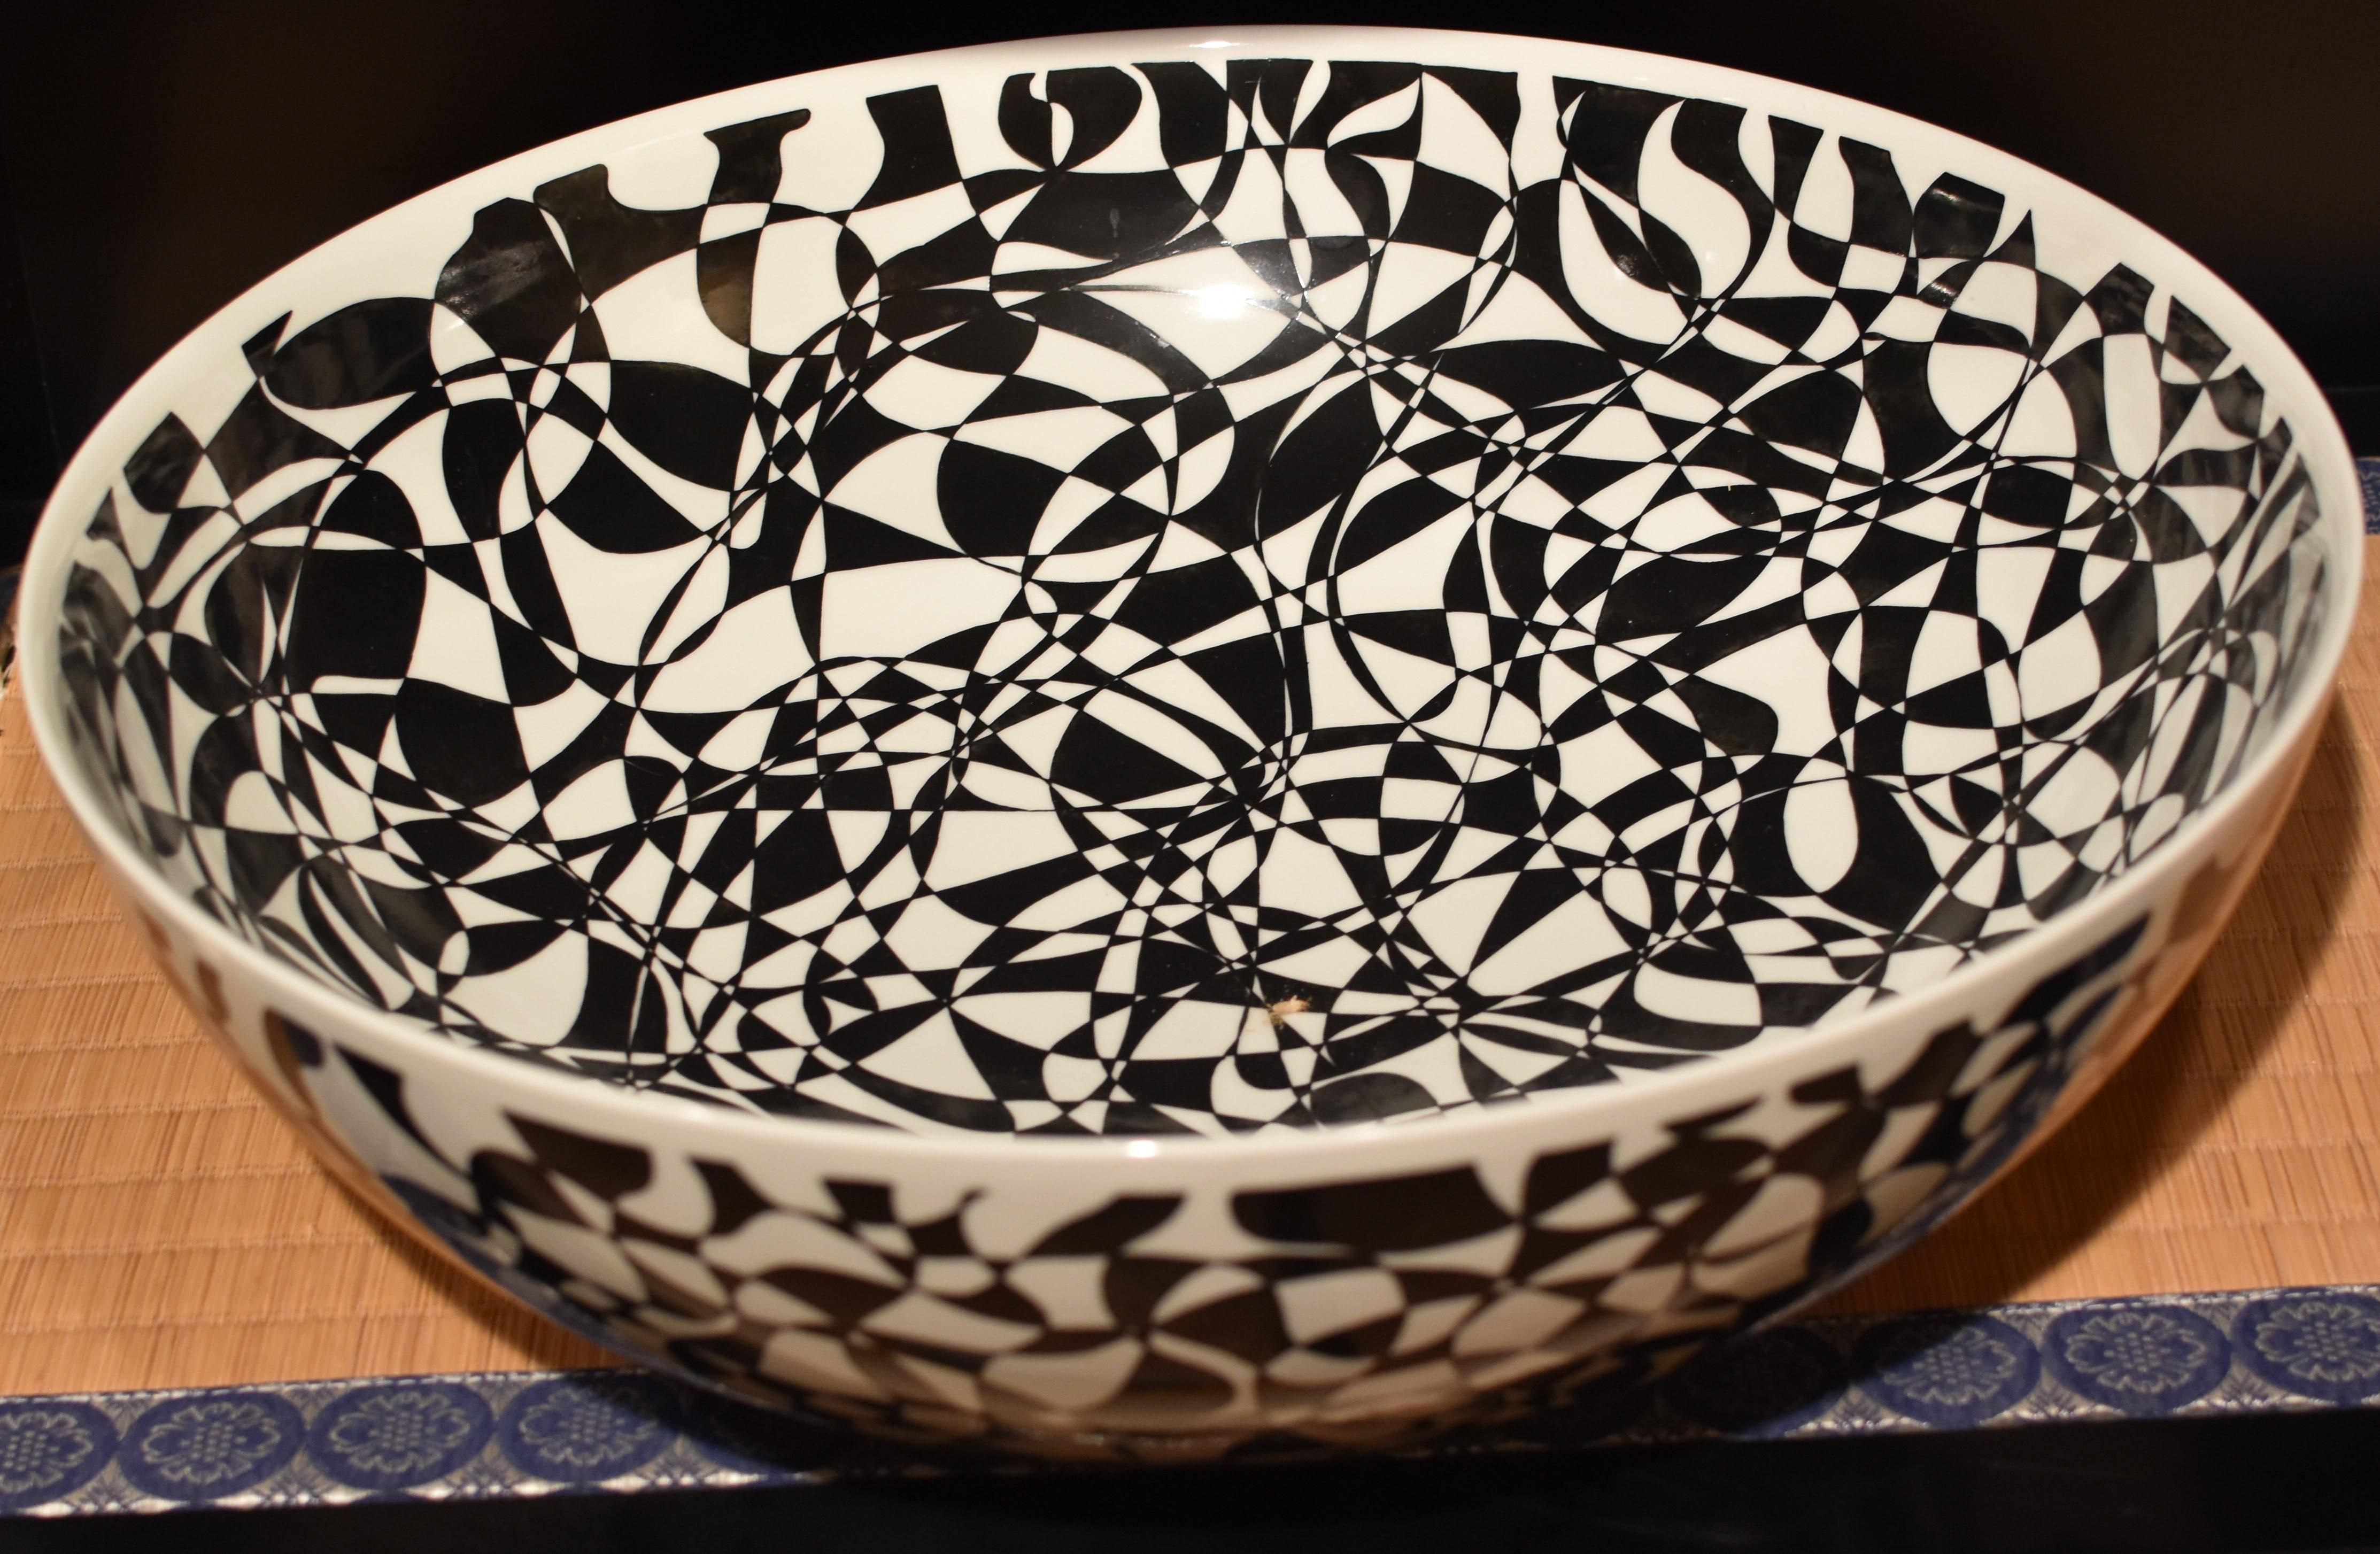 Japanese Contemporary Black White Porcelain Vase by Master Artist For Sale 2